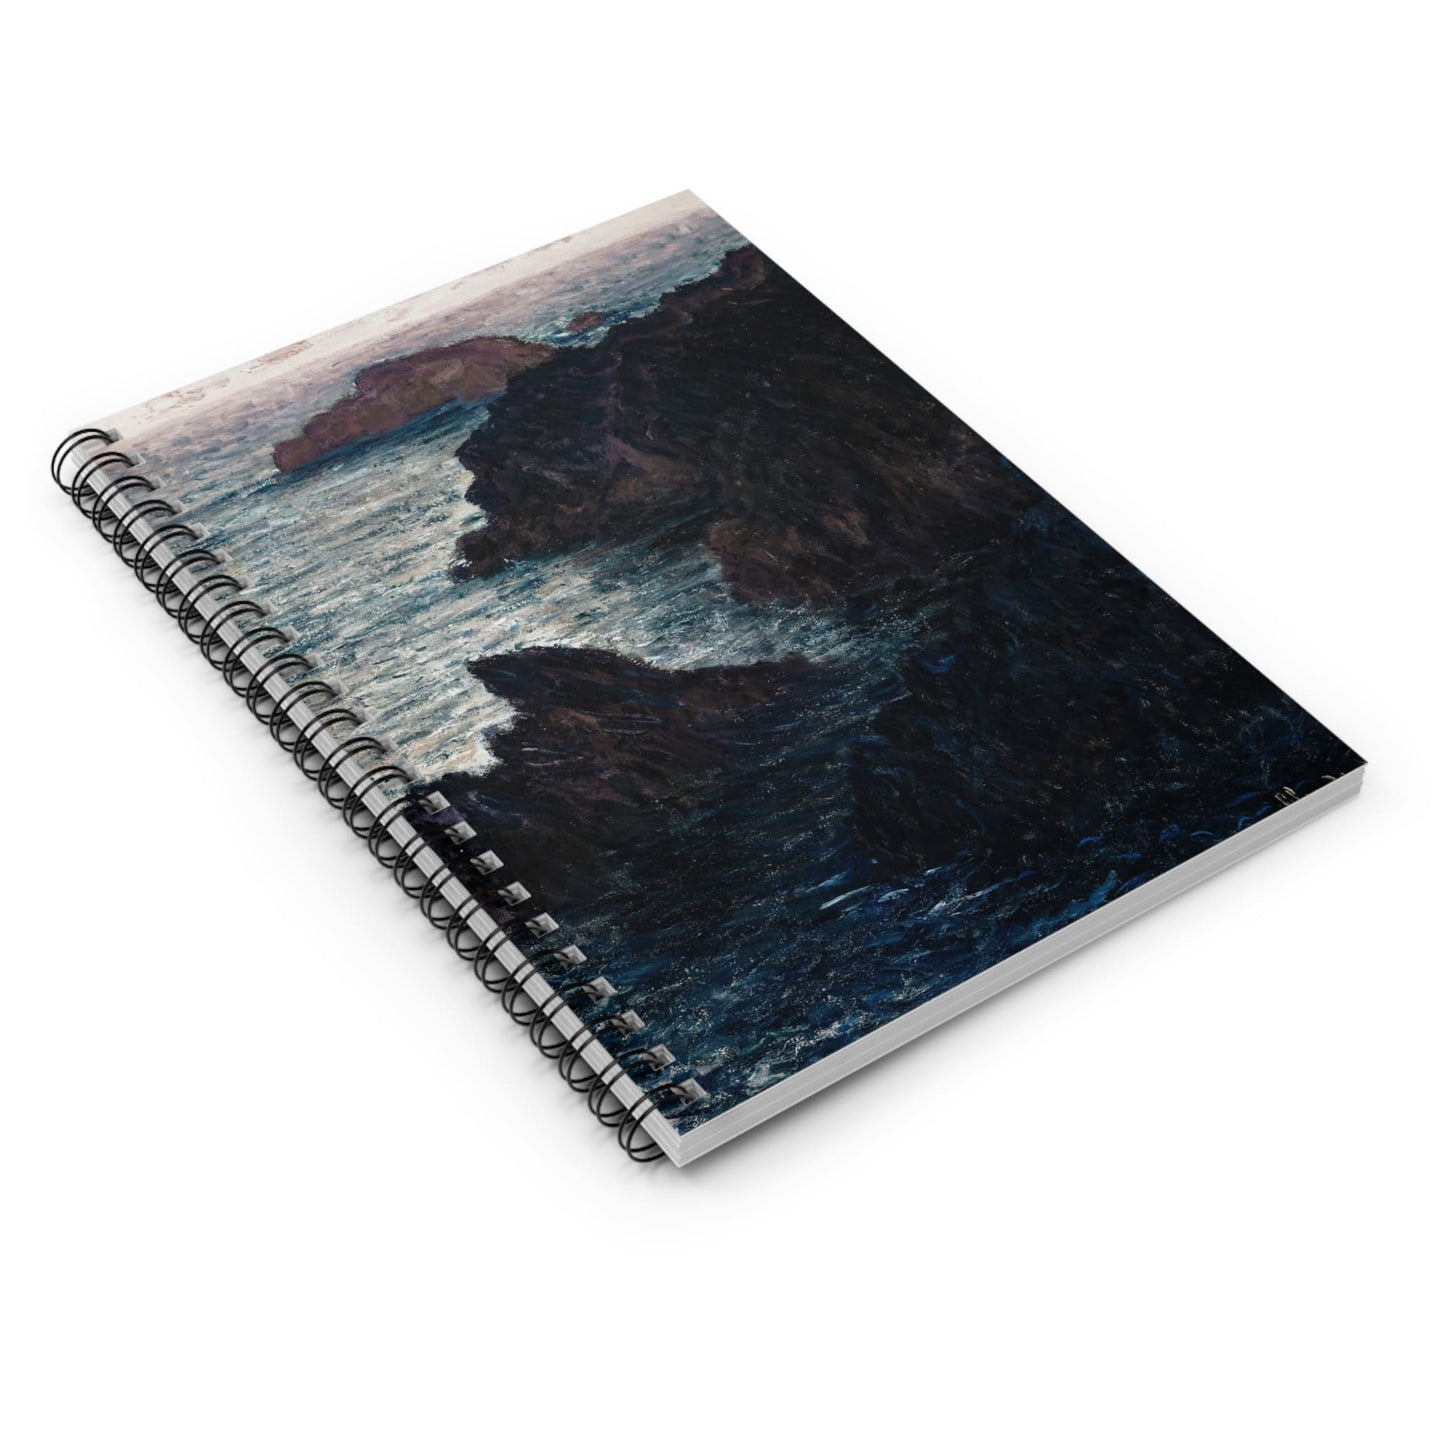 Dark Sea Spiral Notebook Laying Flat on White Surface